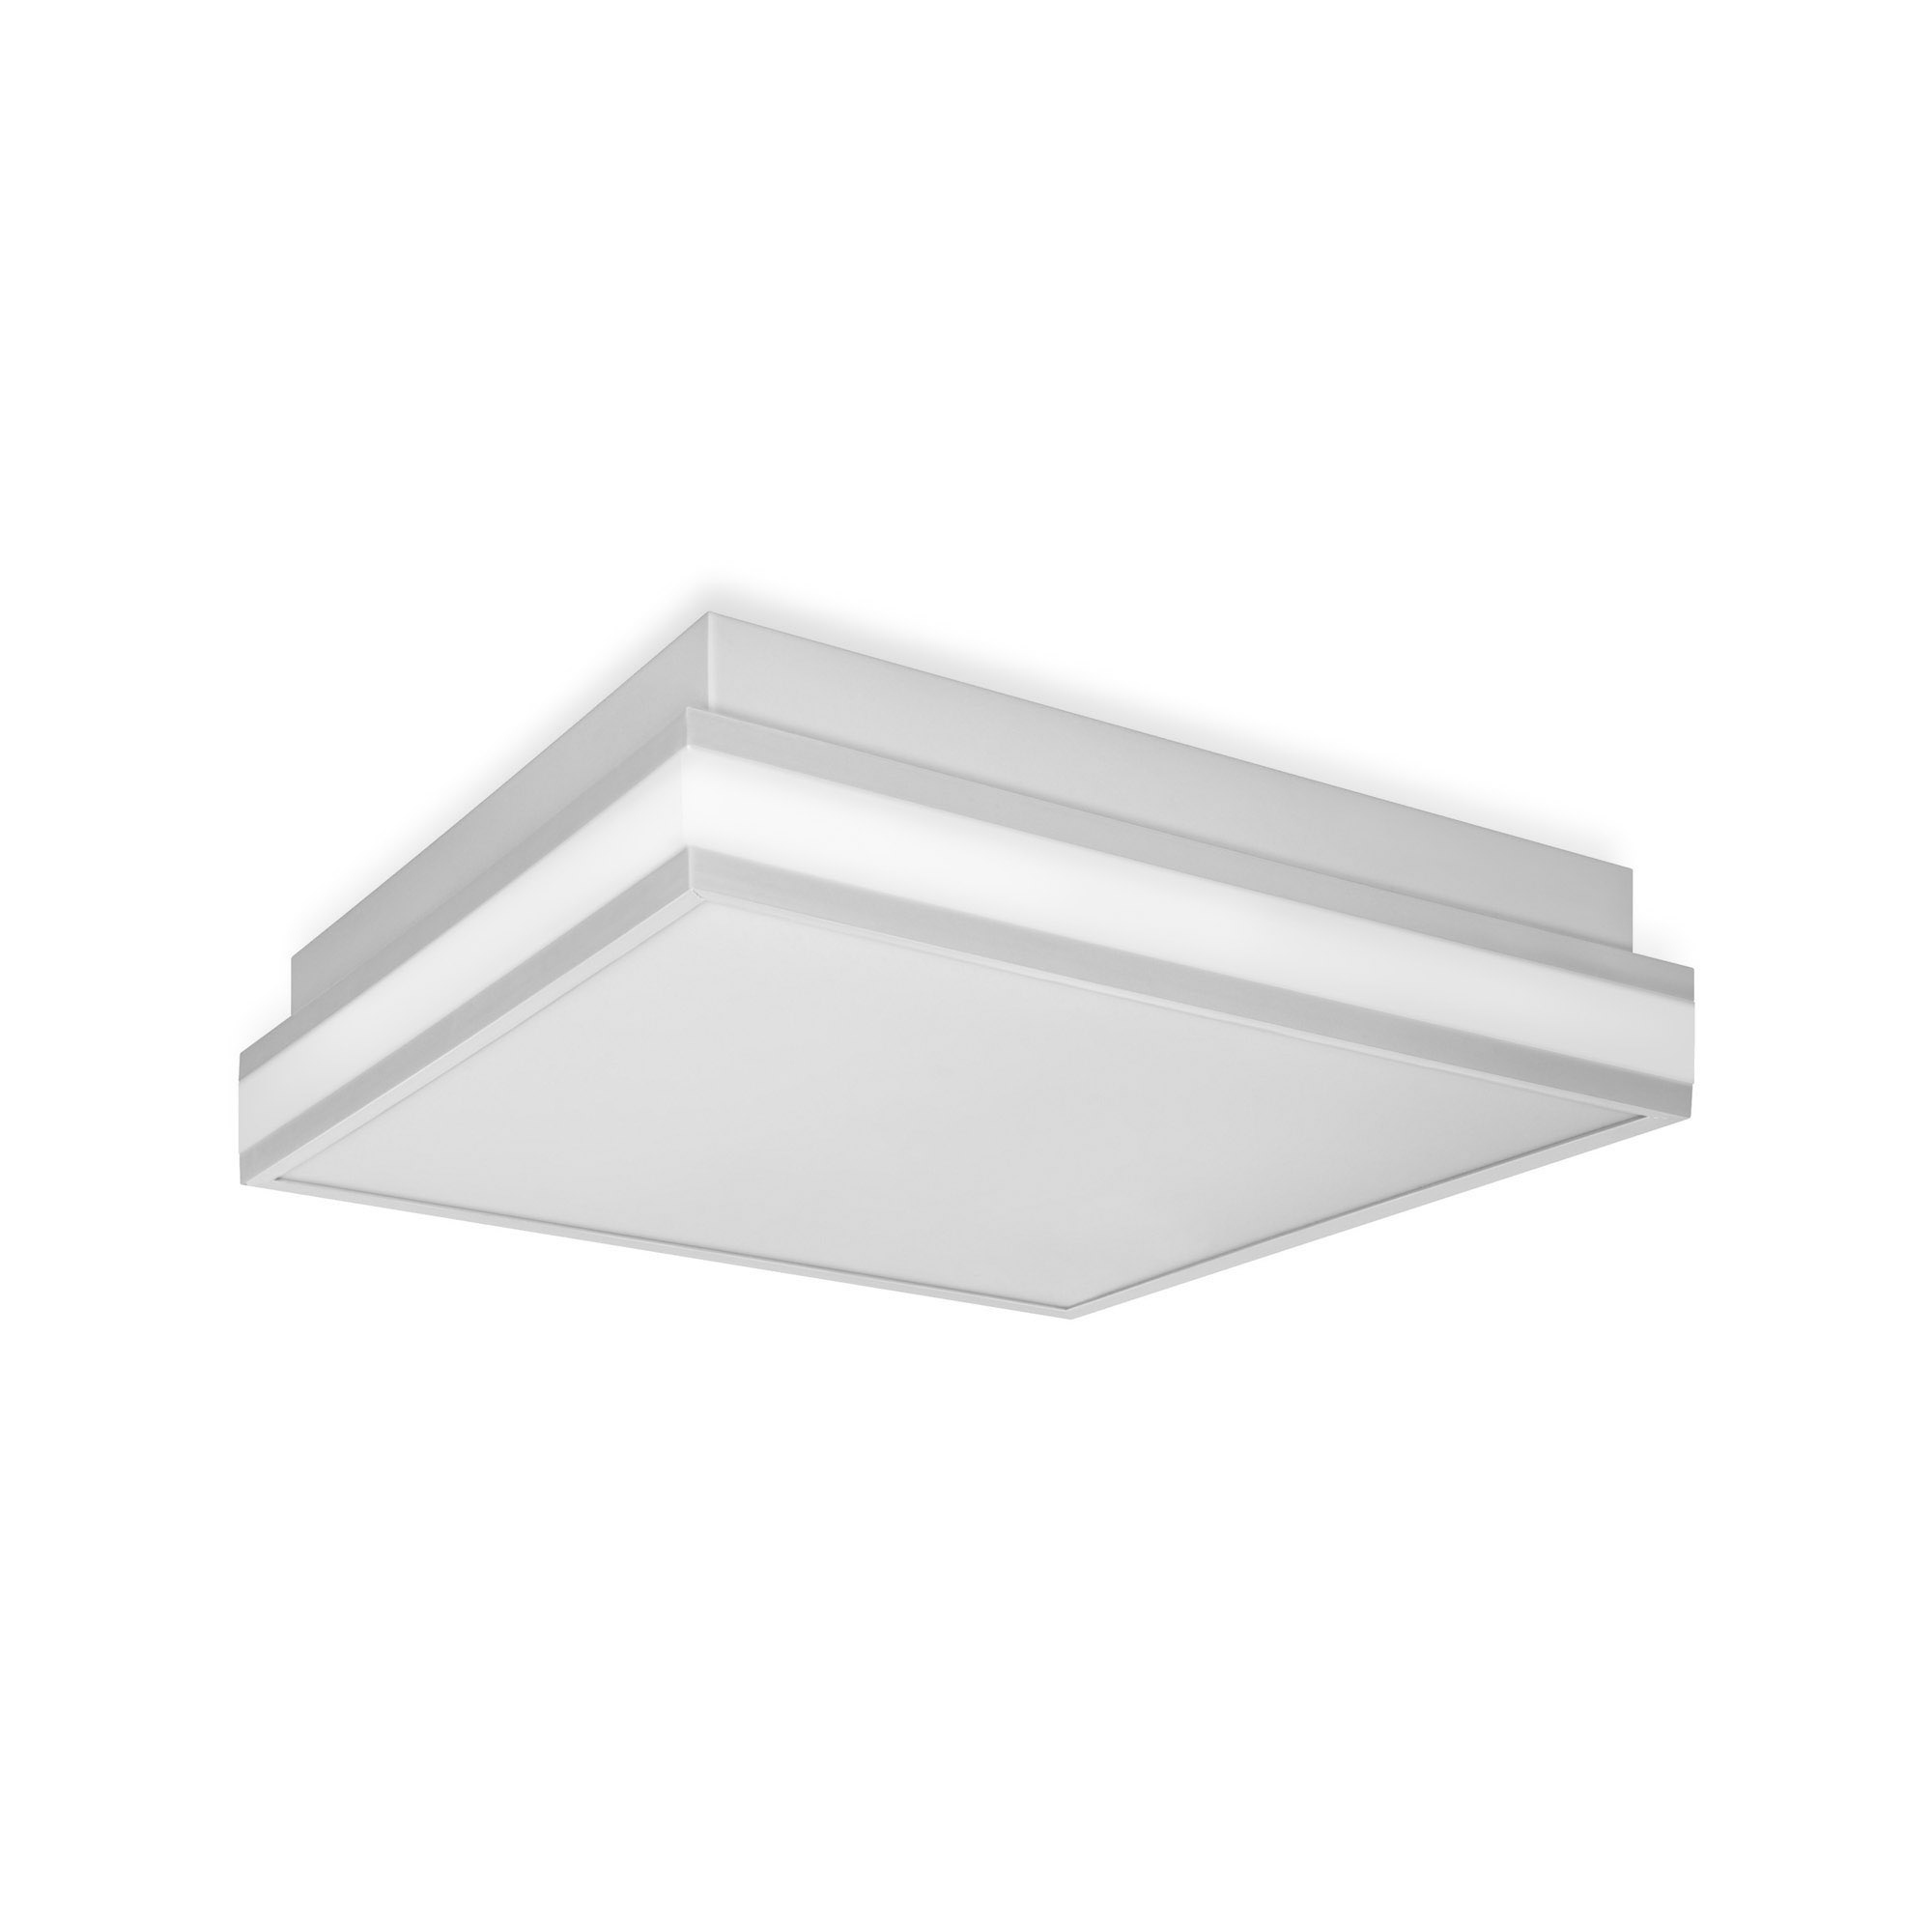 LEDVANCE SMART+ WiFi Tunable White LED Ceiling Light ORBIS MAGNET 300x300mm grey 2500lm